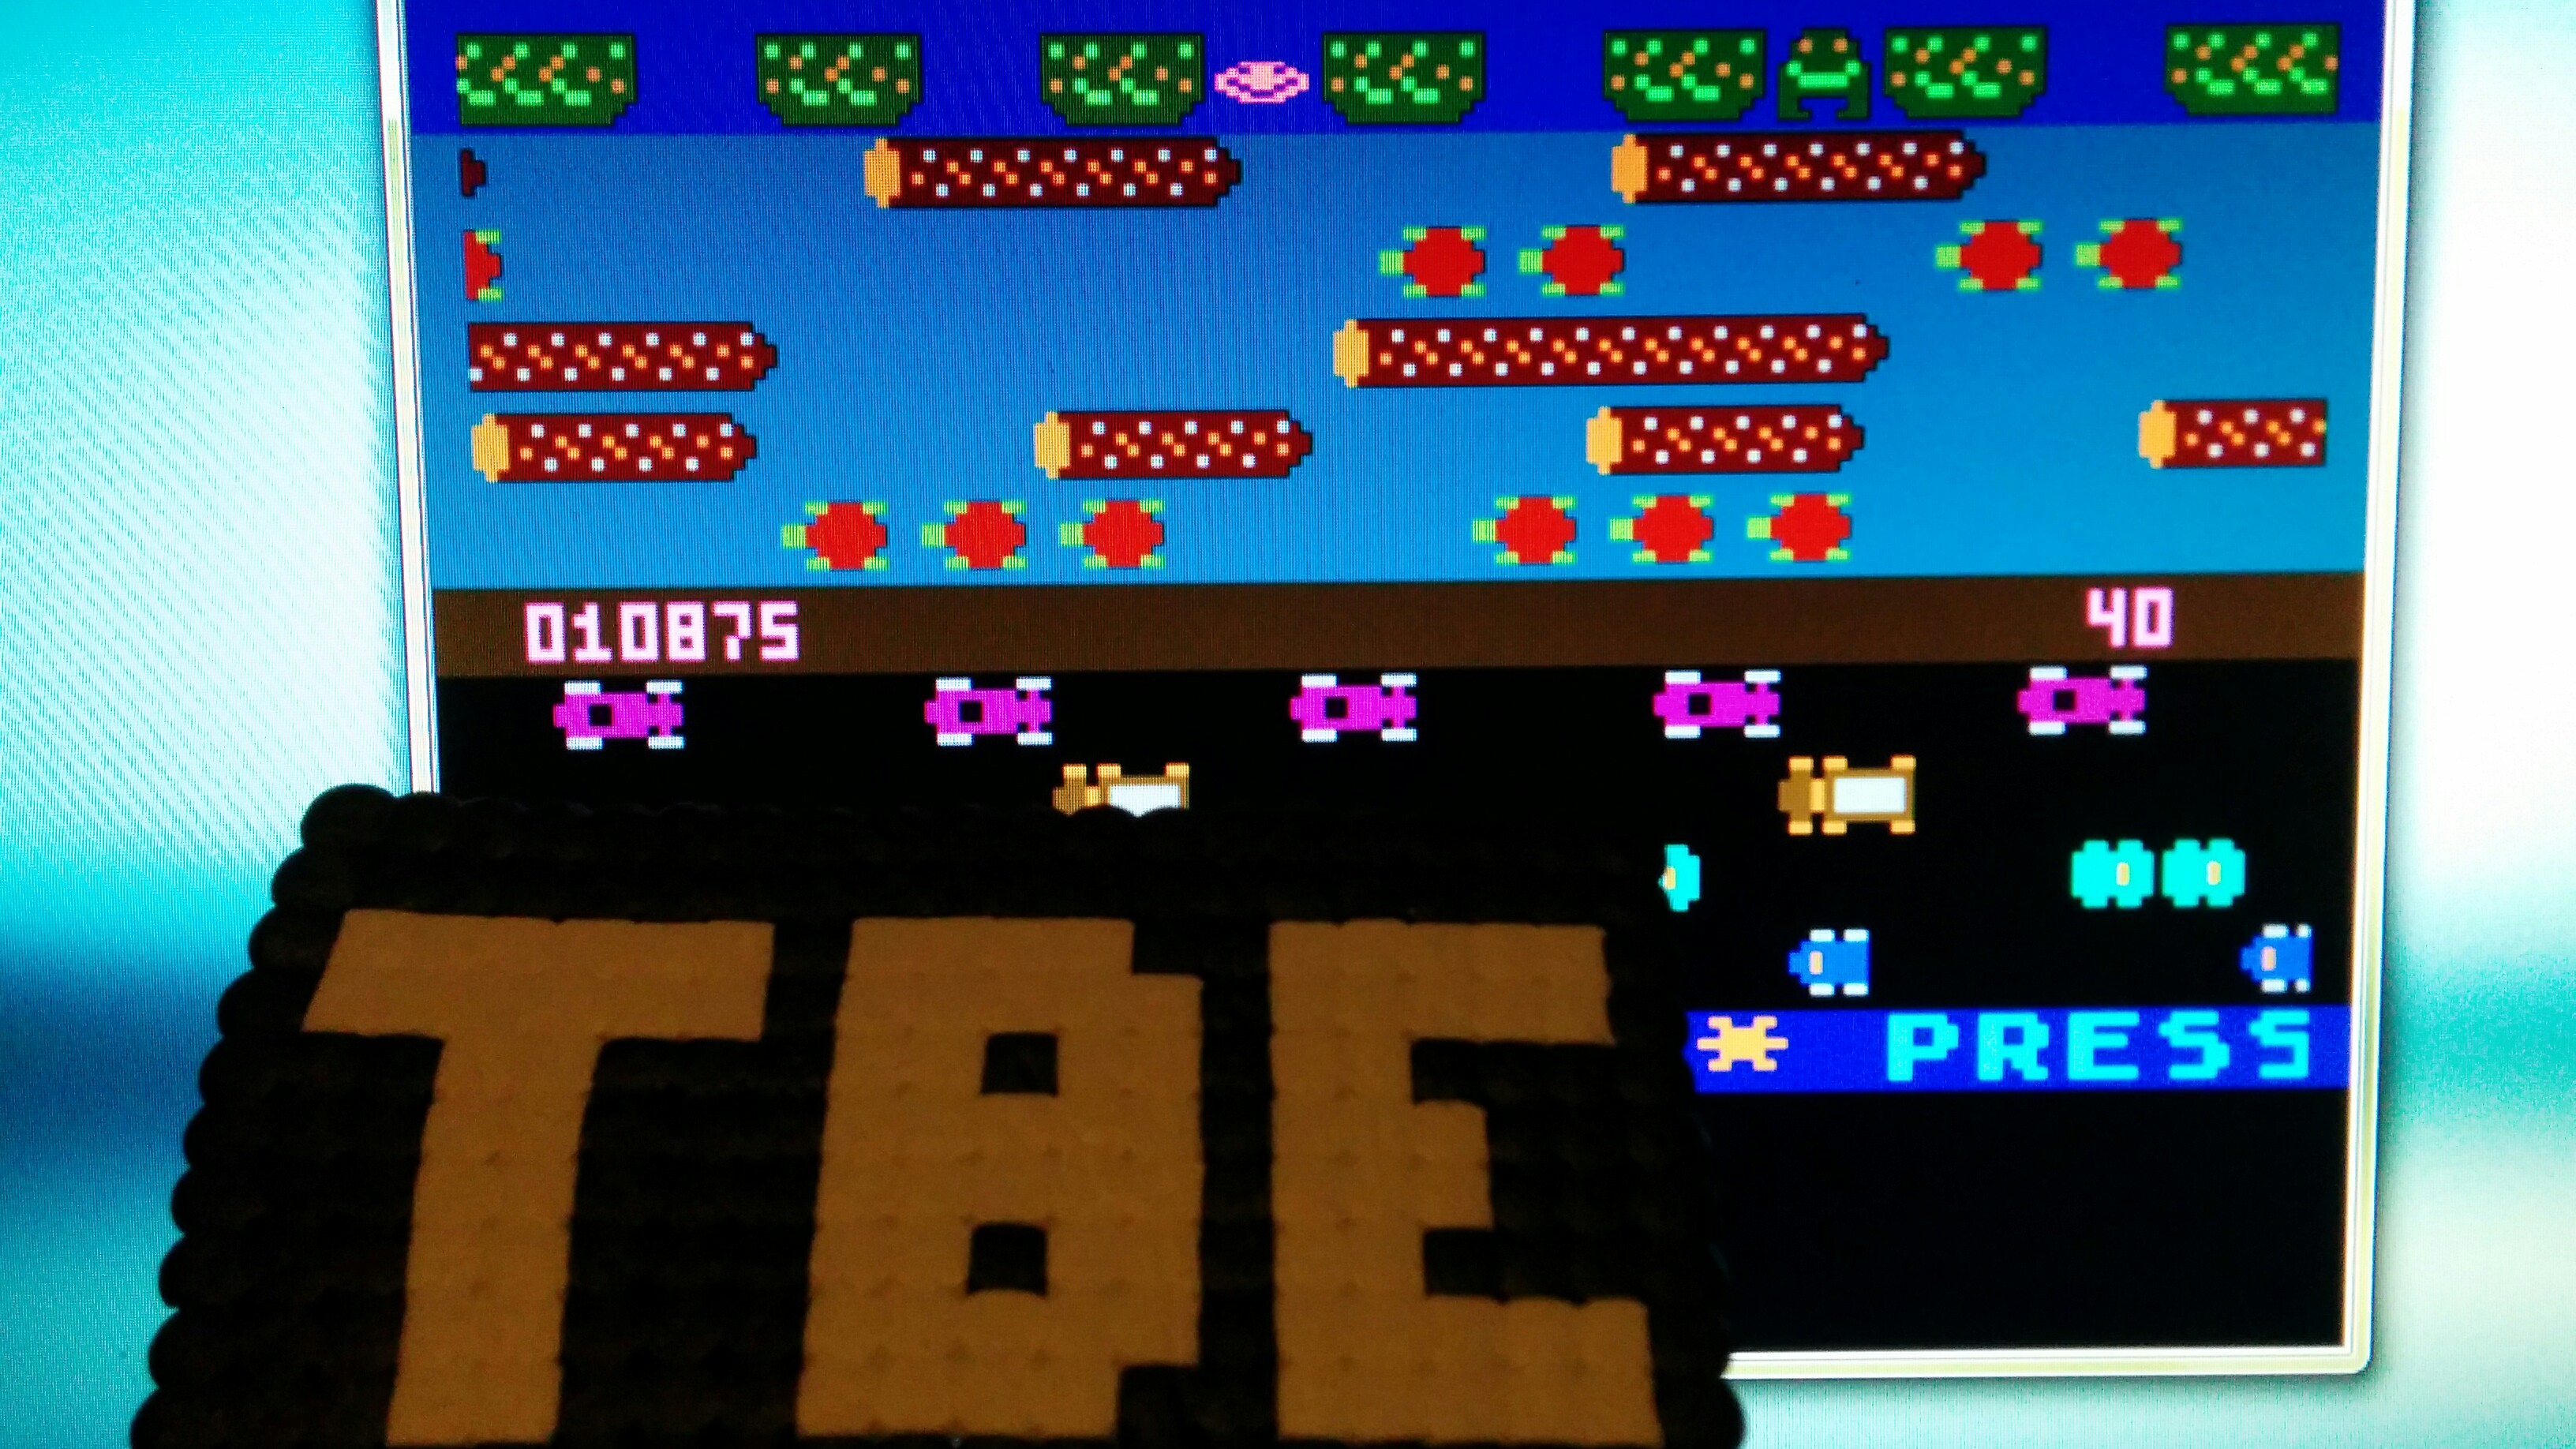 Sixx: Froggie (Atari 400/800/XL/XE Emulated) 10,875 points on 2014-10-06 12:55:37